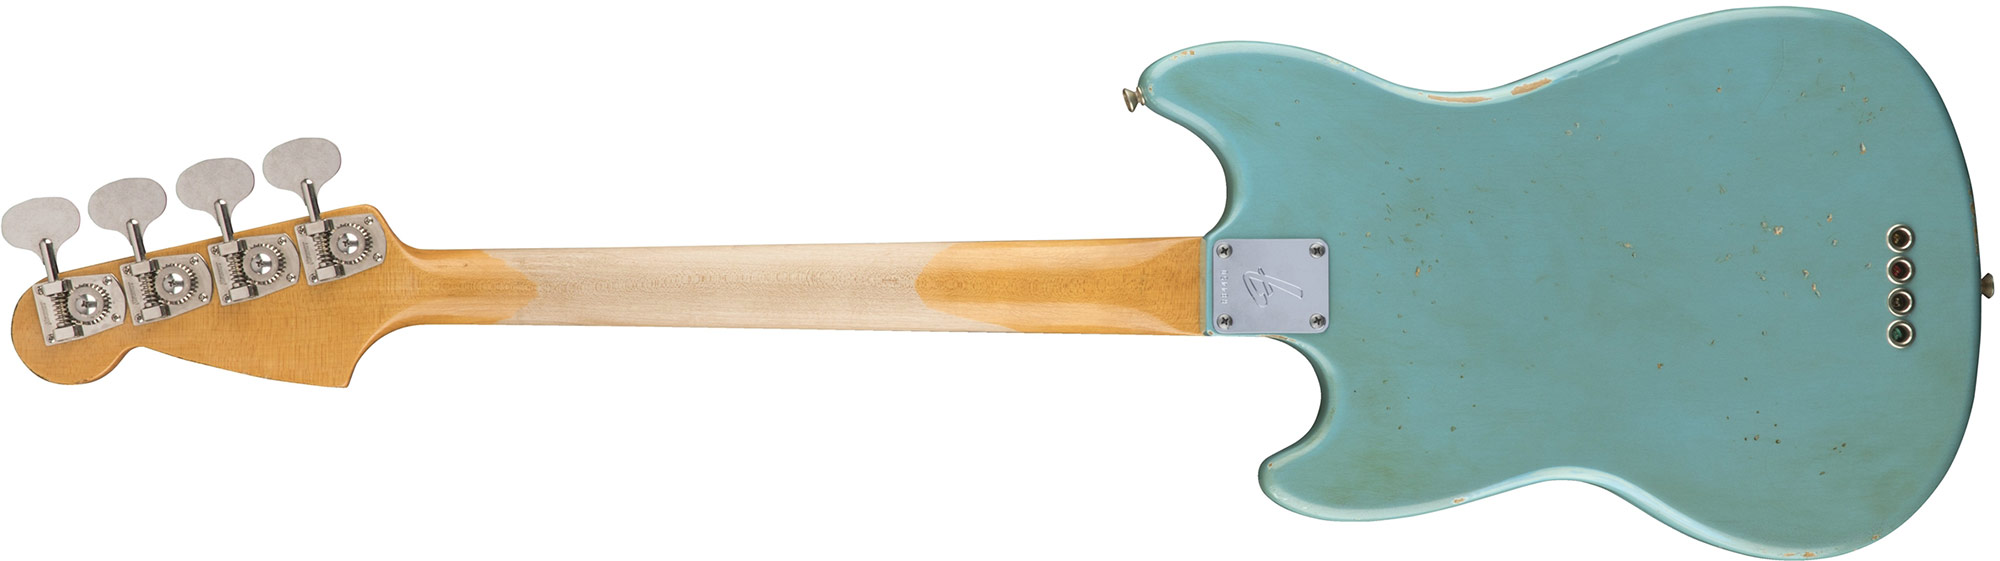 Fender Justin Meldal-johnsen Jmj Mustang Bass Road Worn Mex Rw - Faded Daphne Blue - Electric bass for kids - Variation 1